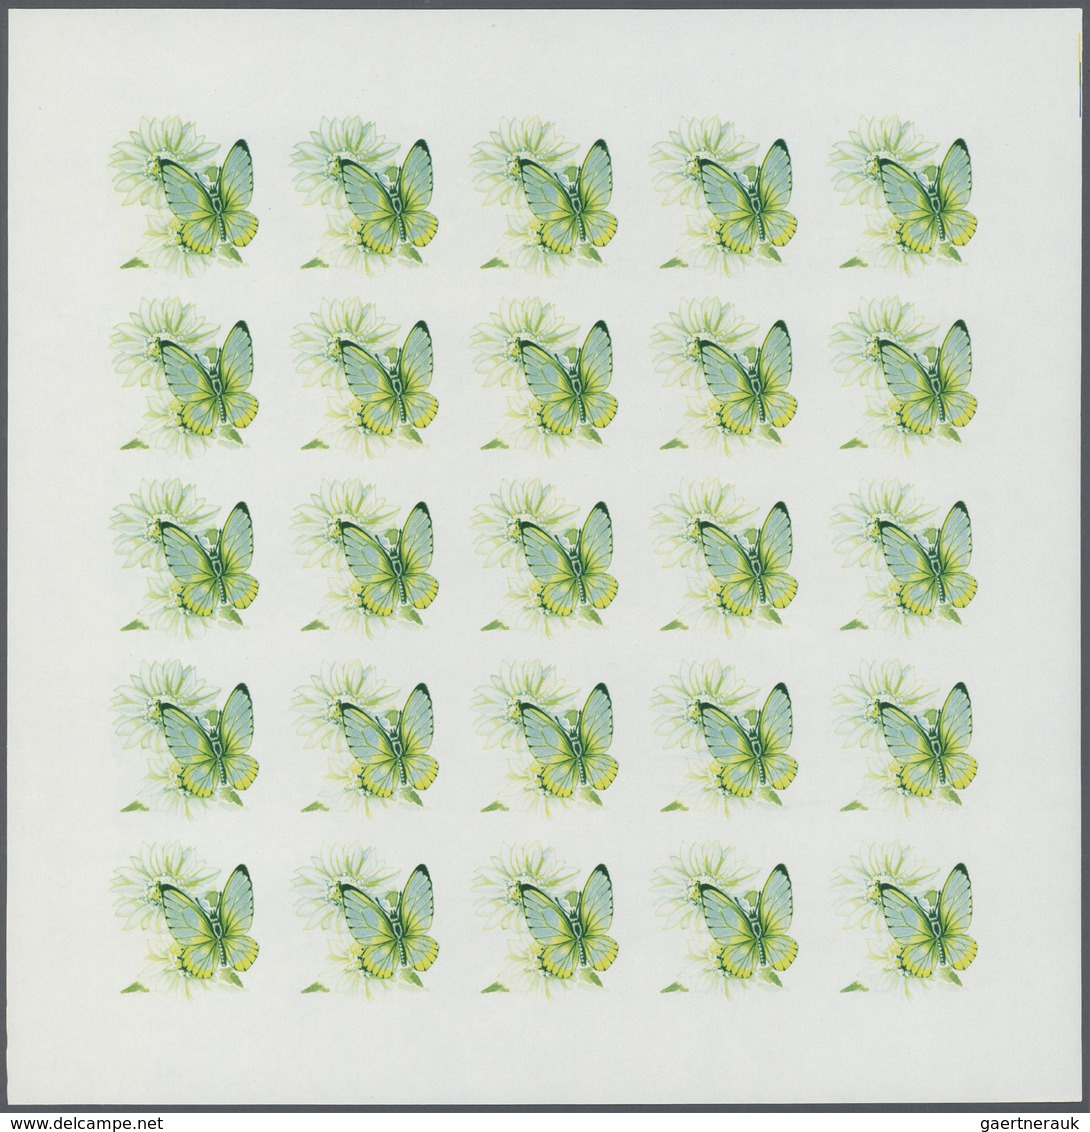 25795 Thematik: Tiere-Schmetterlinge / animals-butterflies: 1967 (May 11), Fujeira. Progressive proofs set